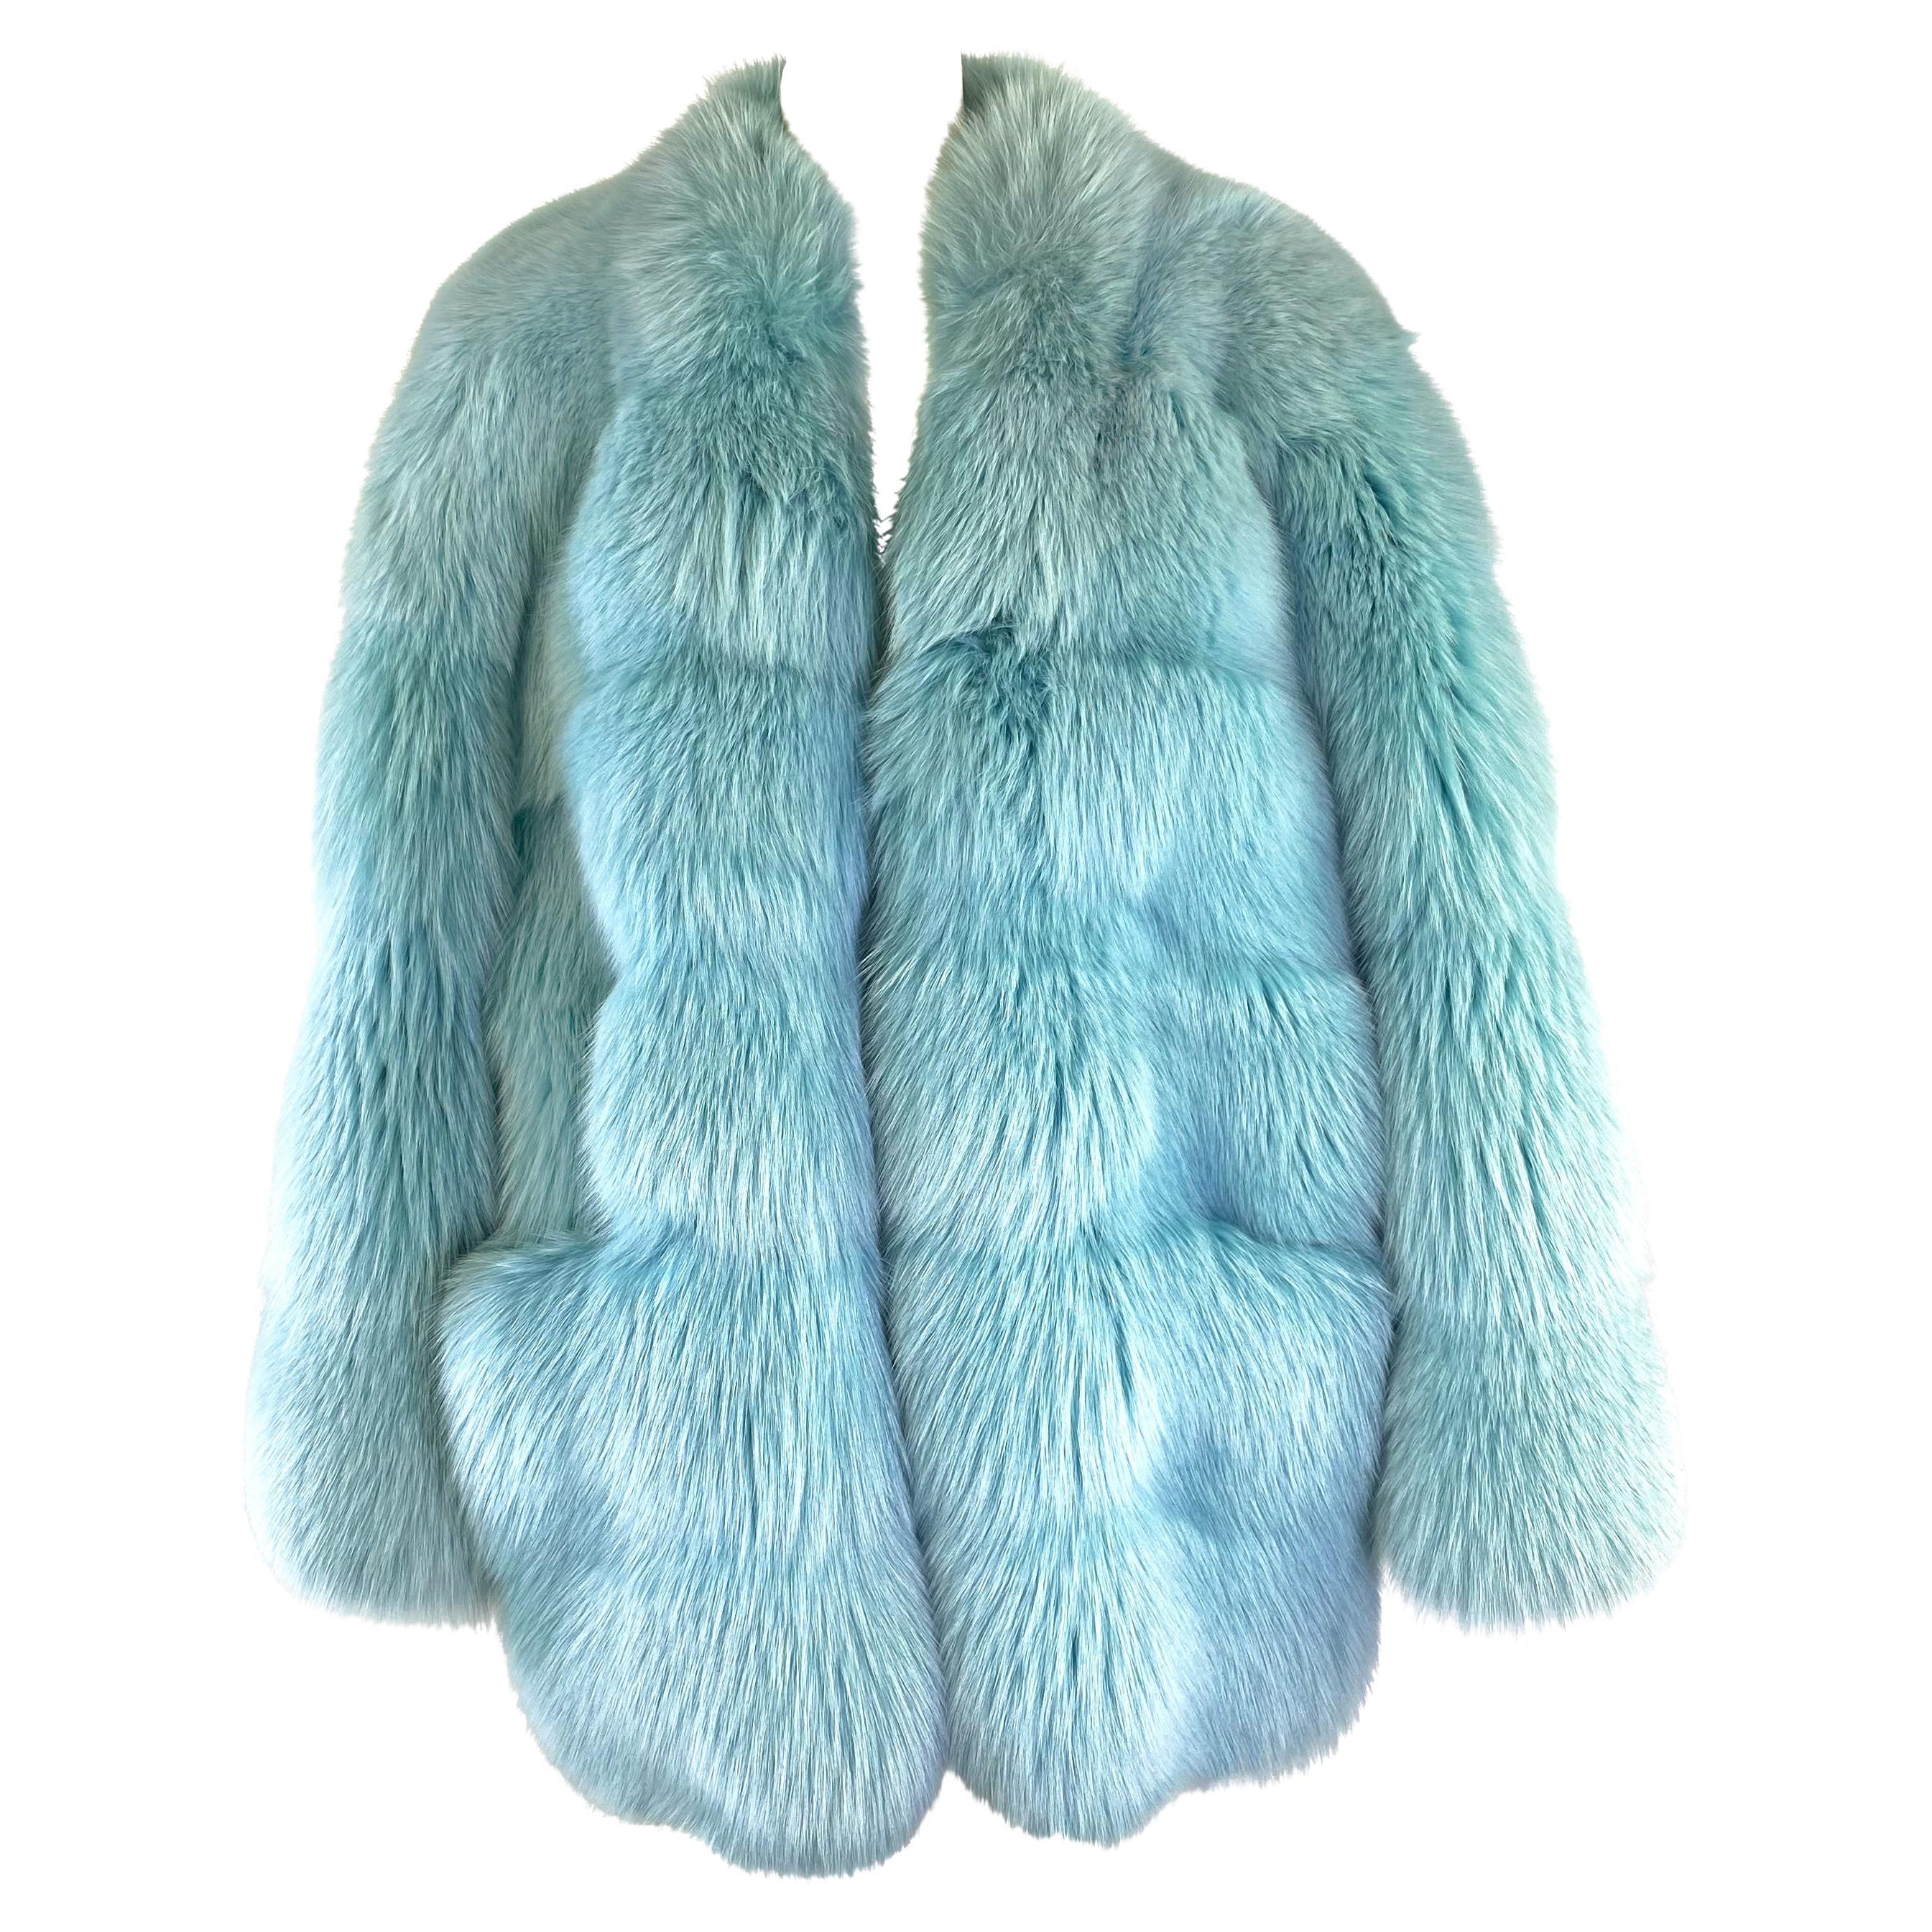 F/W 1997 Tom Ford by Gucci Runway Baby Blue Fox Fur Chubby Museum Coat 